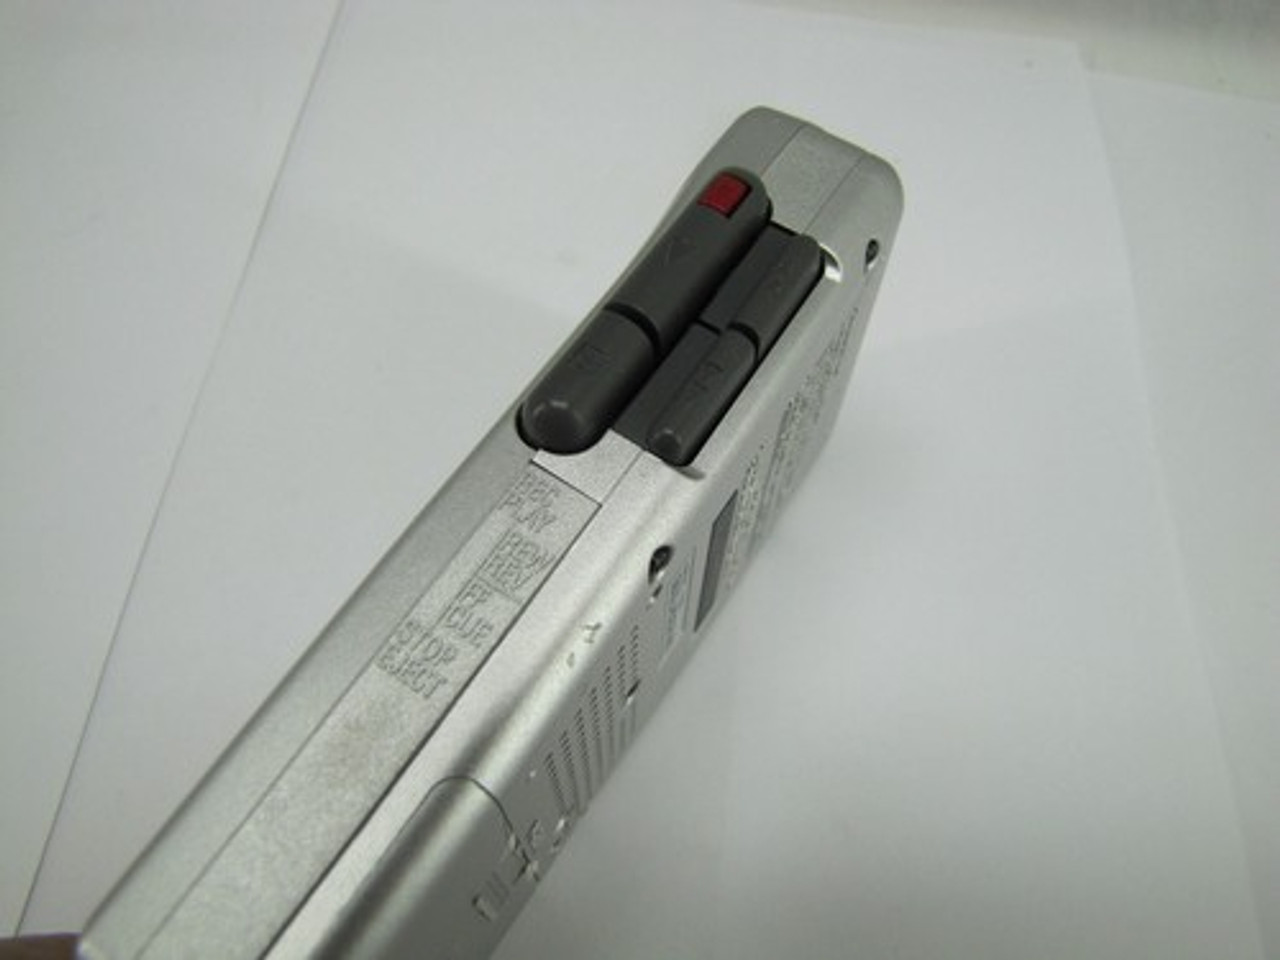 Panasonic RN505 Handheld Microcassette Voice Recorder controls